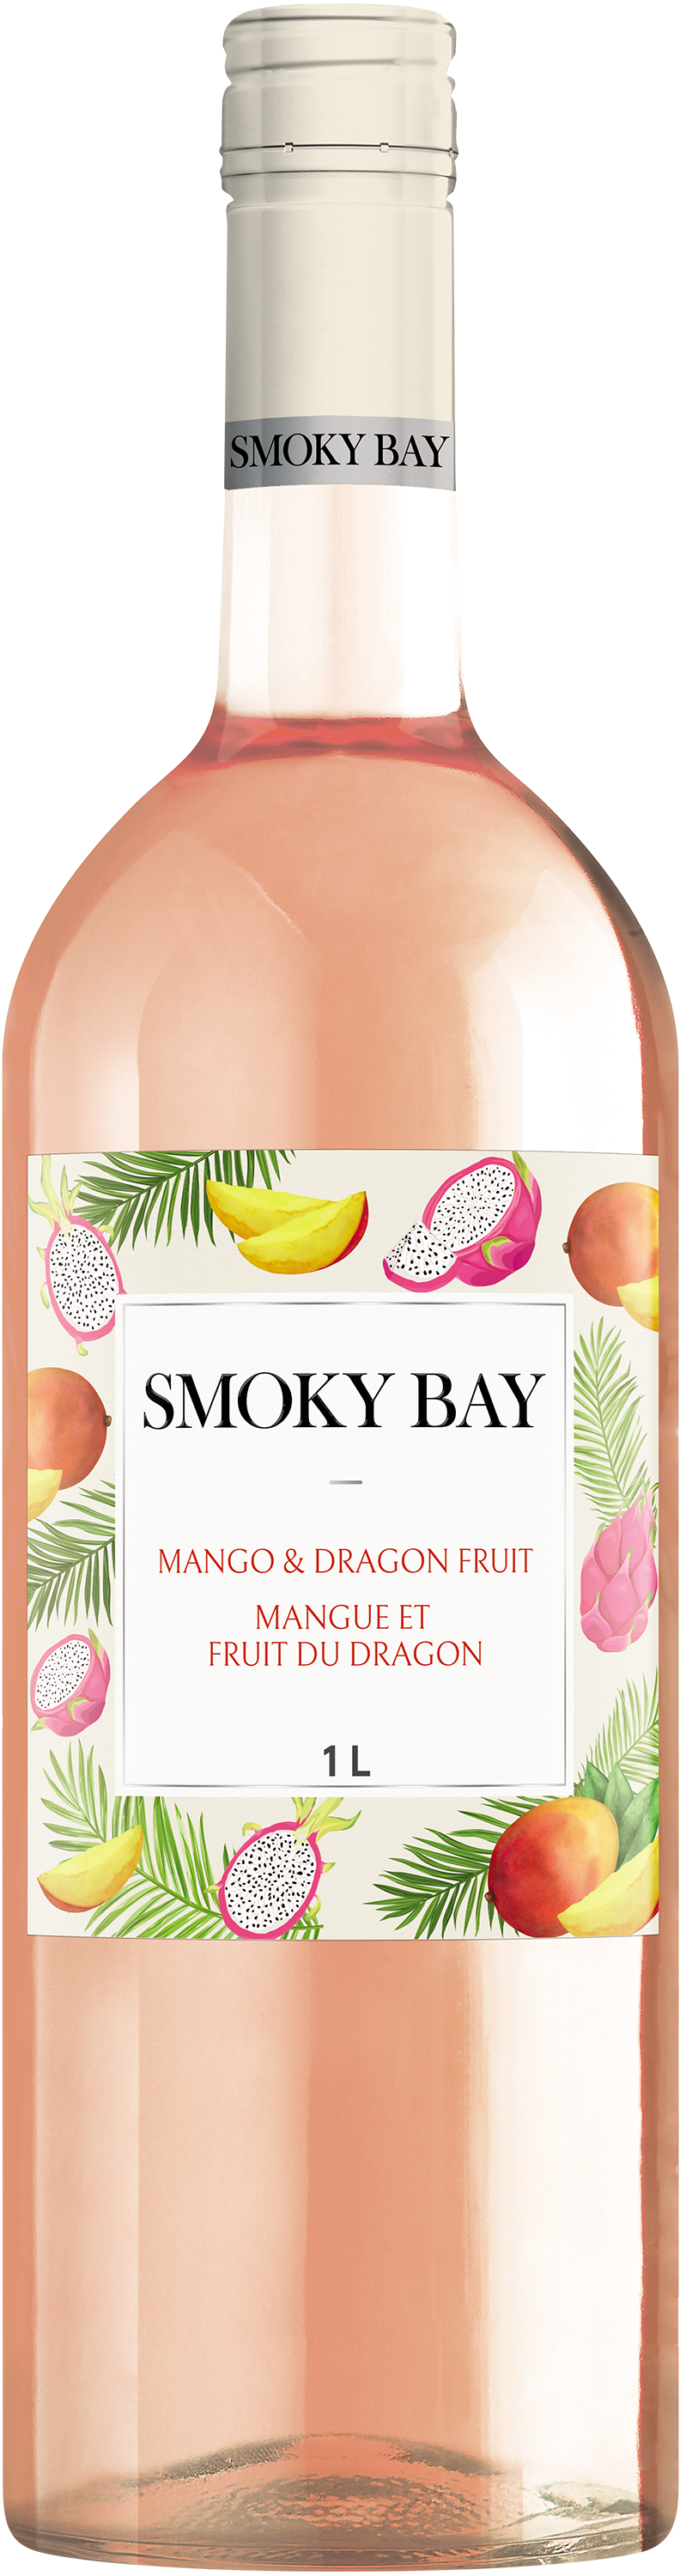 Smoky Bay Mango & Dragon Fruit